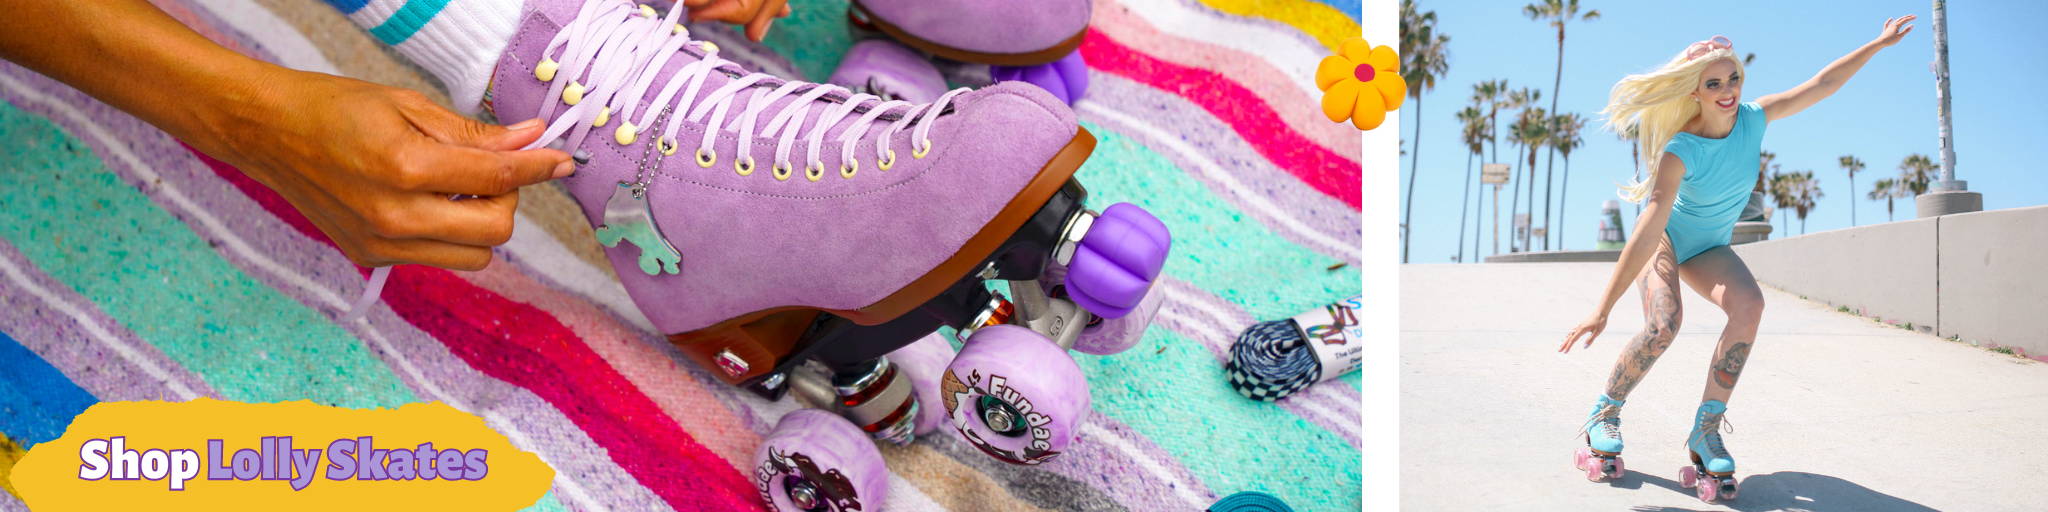 Shop Lolly skates